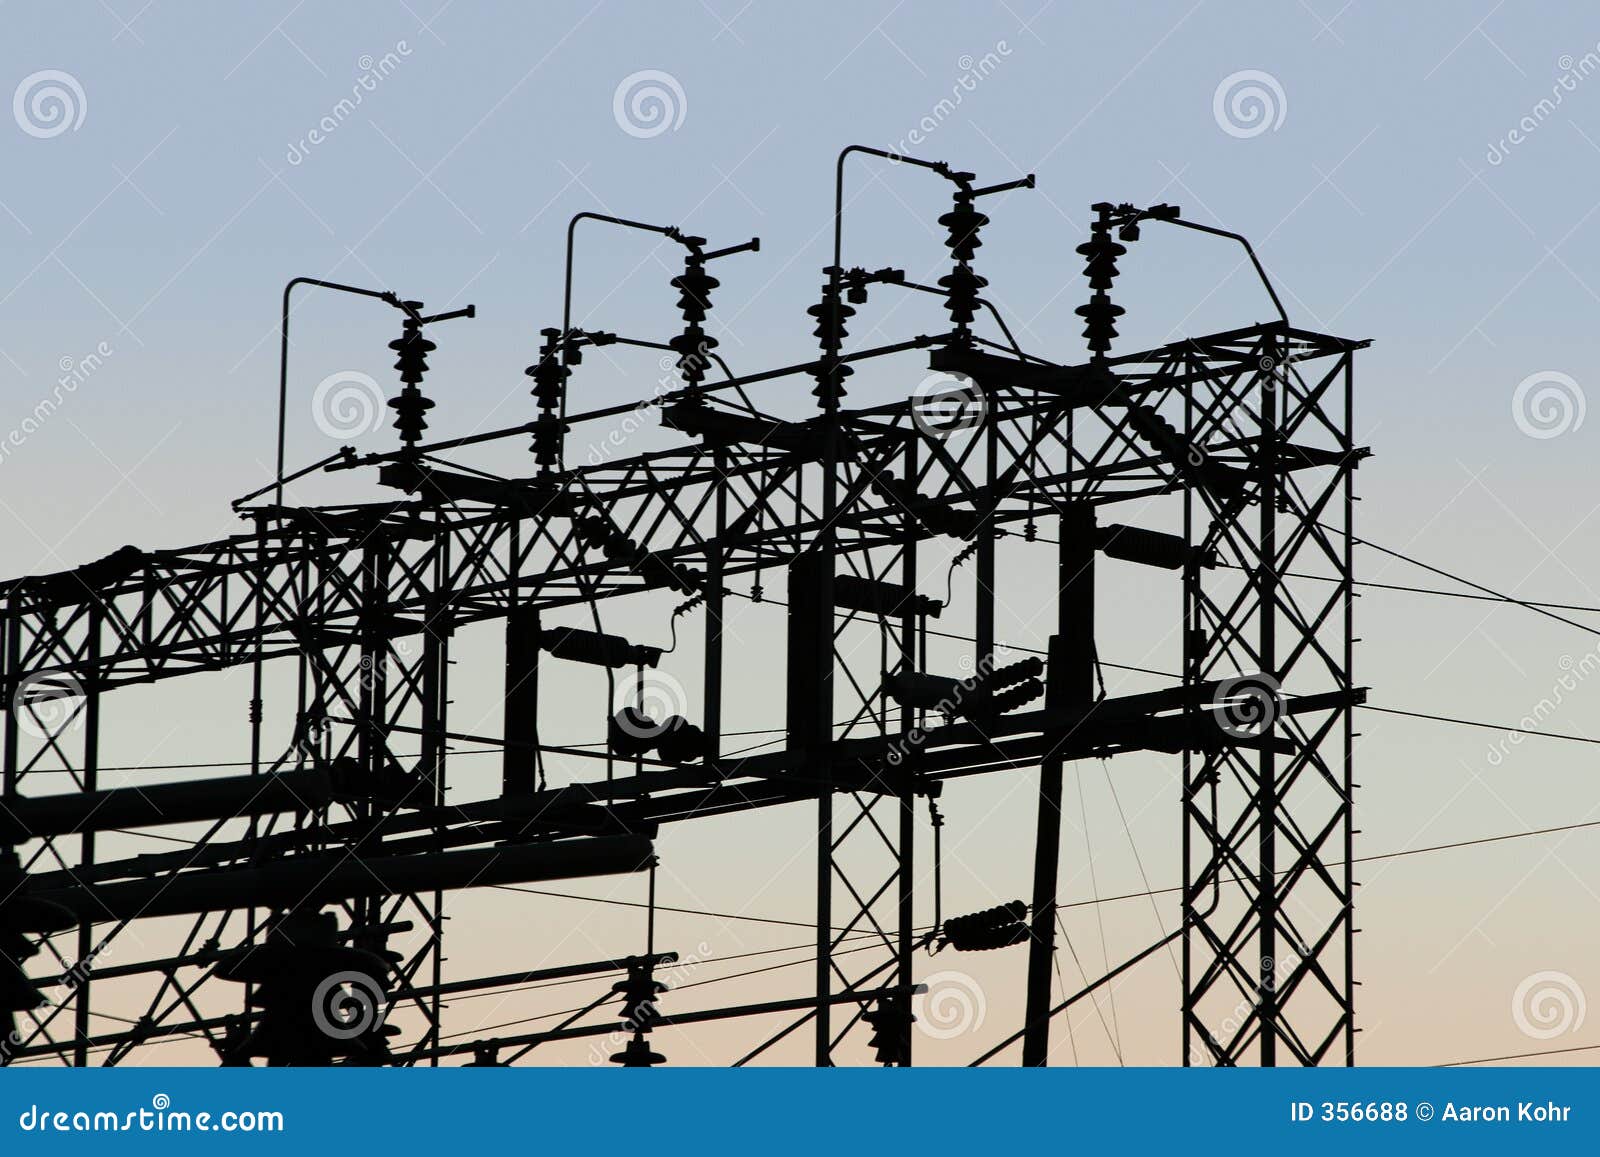 power grid clipart - photo #33